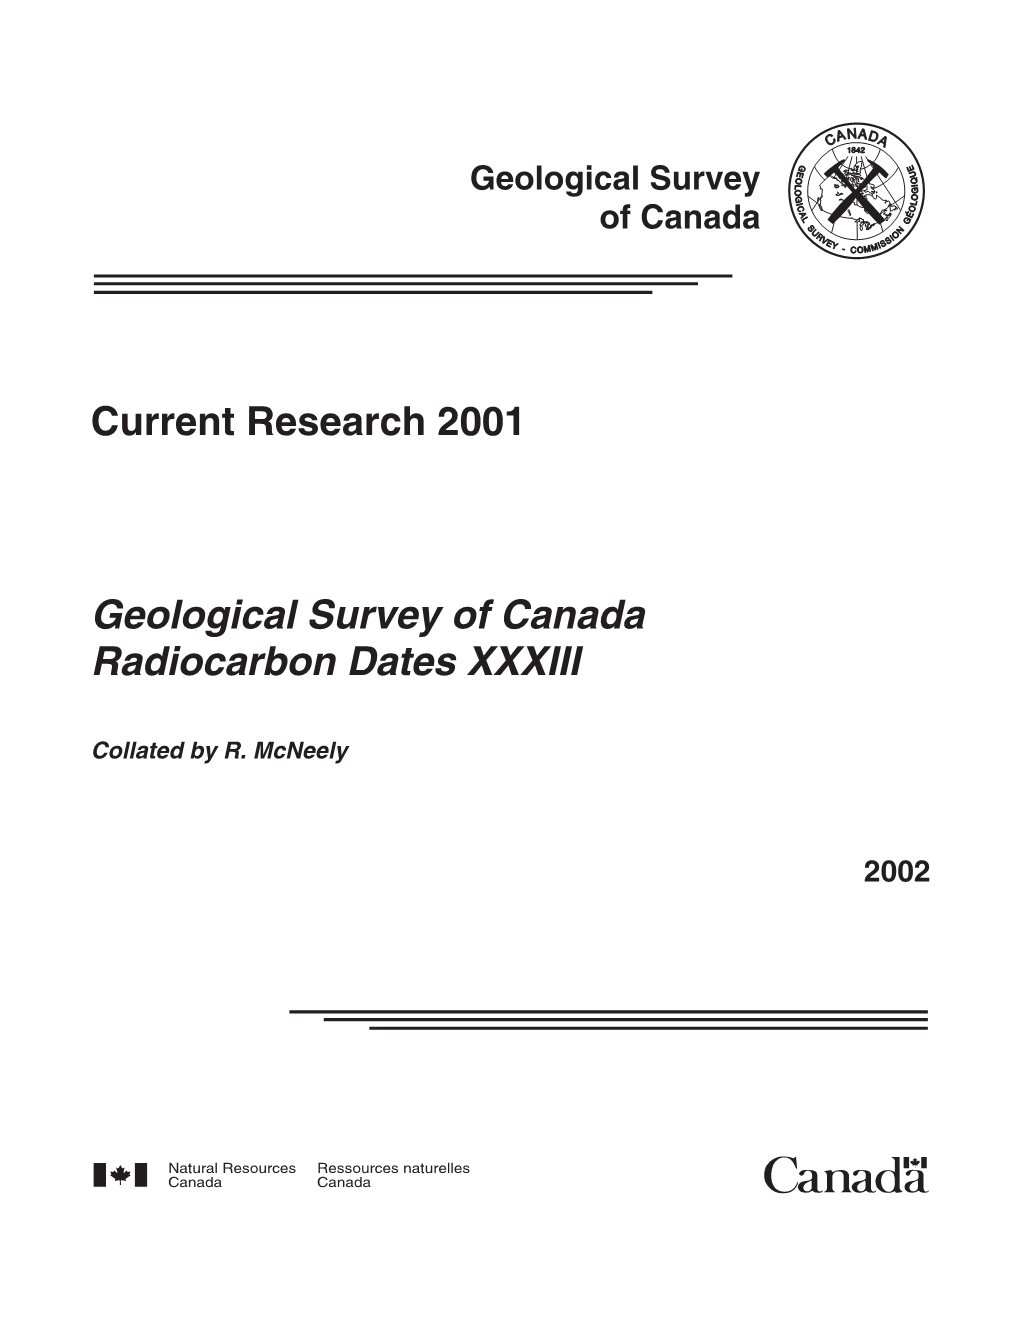 Geological Survey of Canada Radiocarbon Dates XXXIII